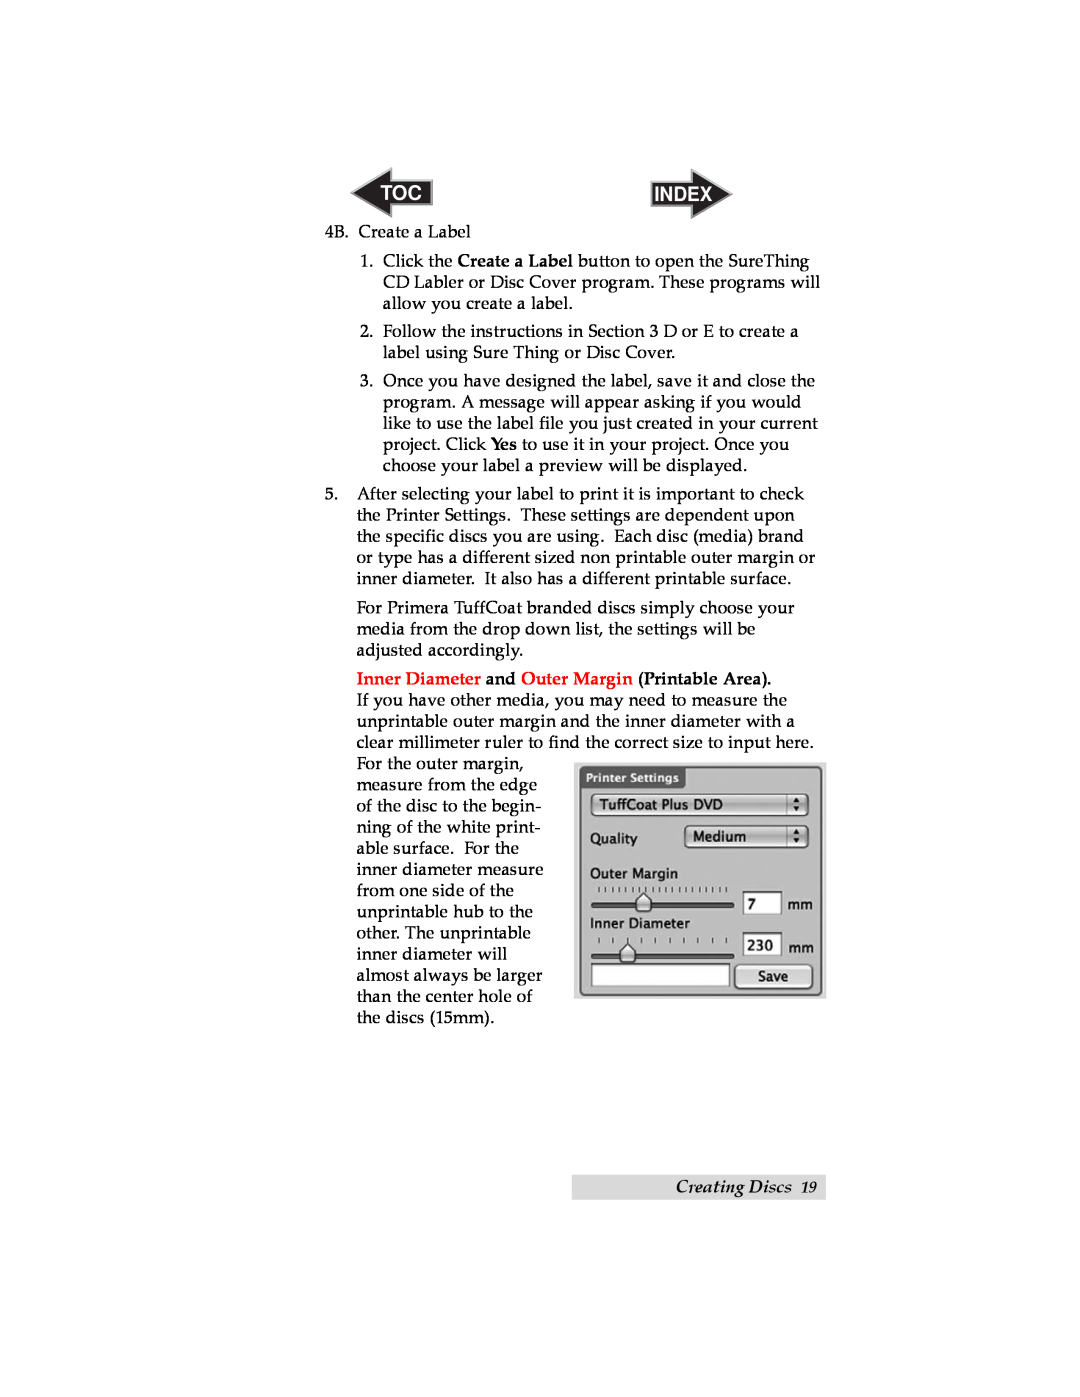 Primera Technology 032910-511262 user manual Index, 4B. Create a Label, Creating Discs 